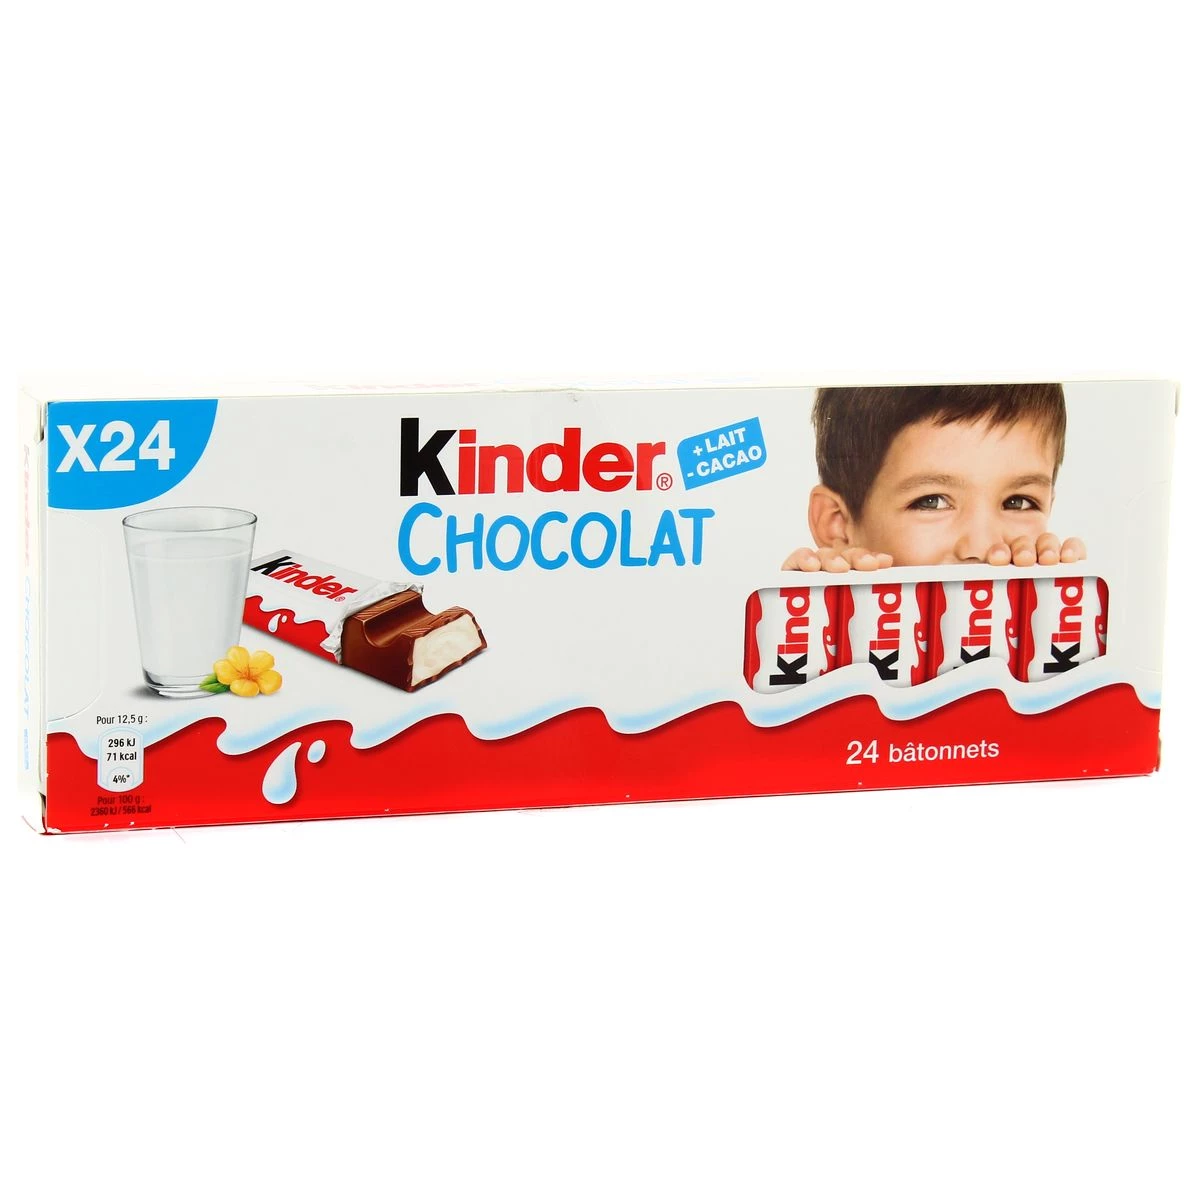 Chocolate bars 300g - KINDER